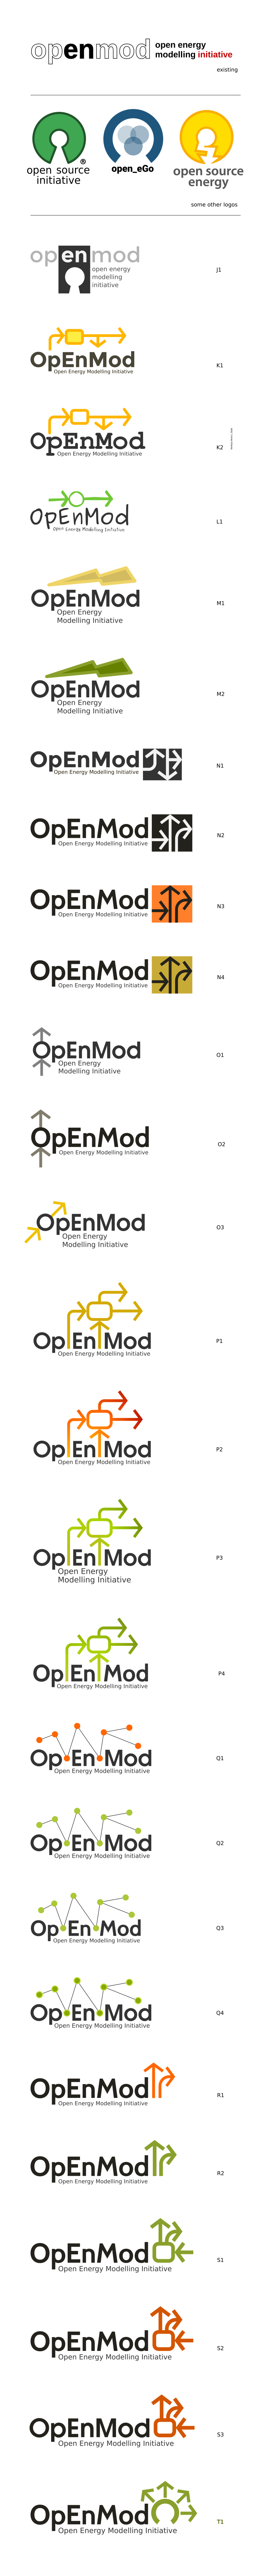 Openmod logo / loop two